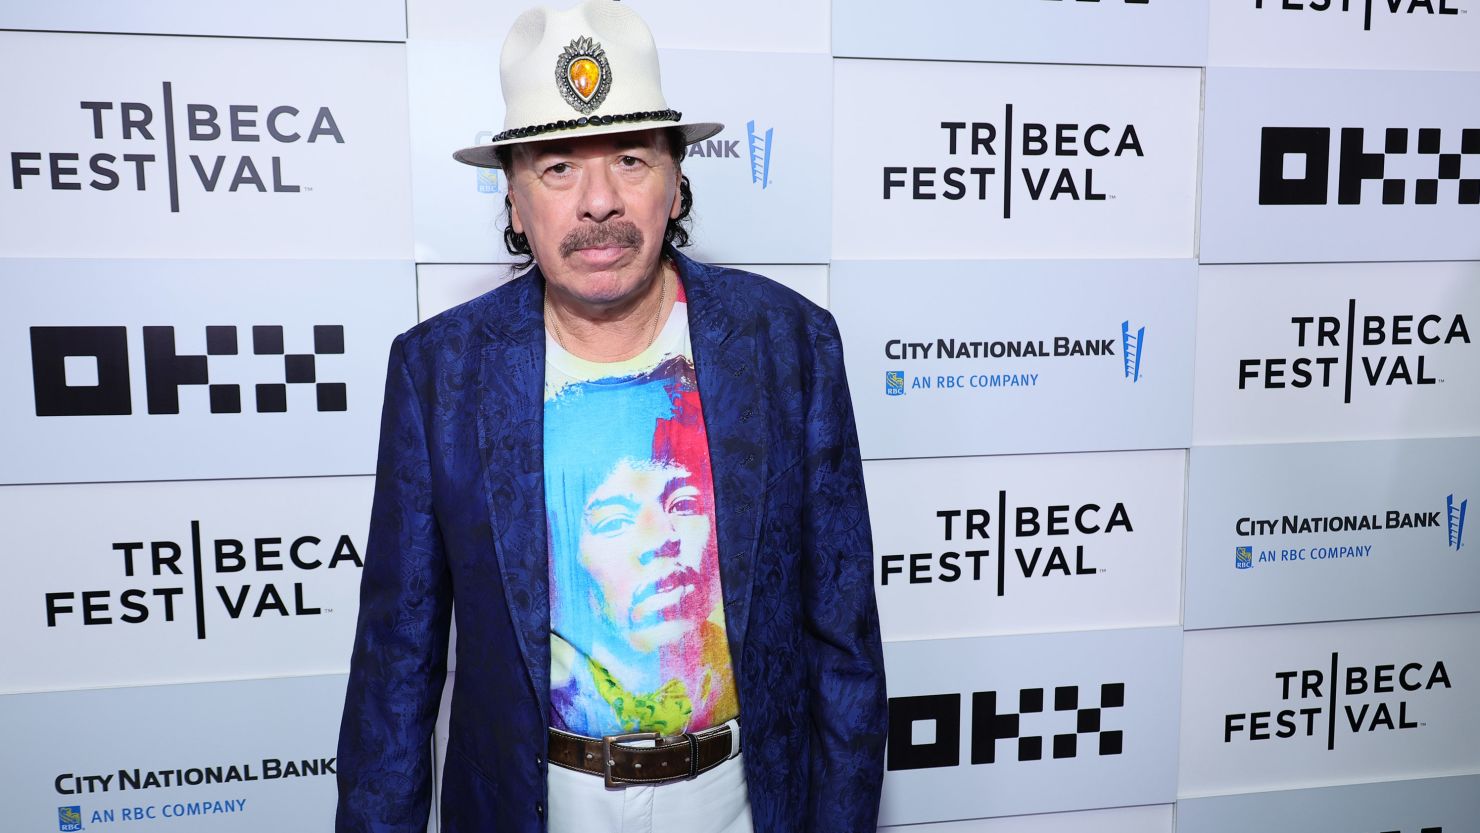 Carlos Santana at the New York premiere of "Carlos" in June. 